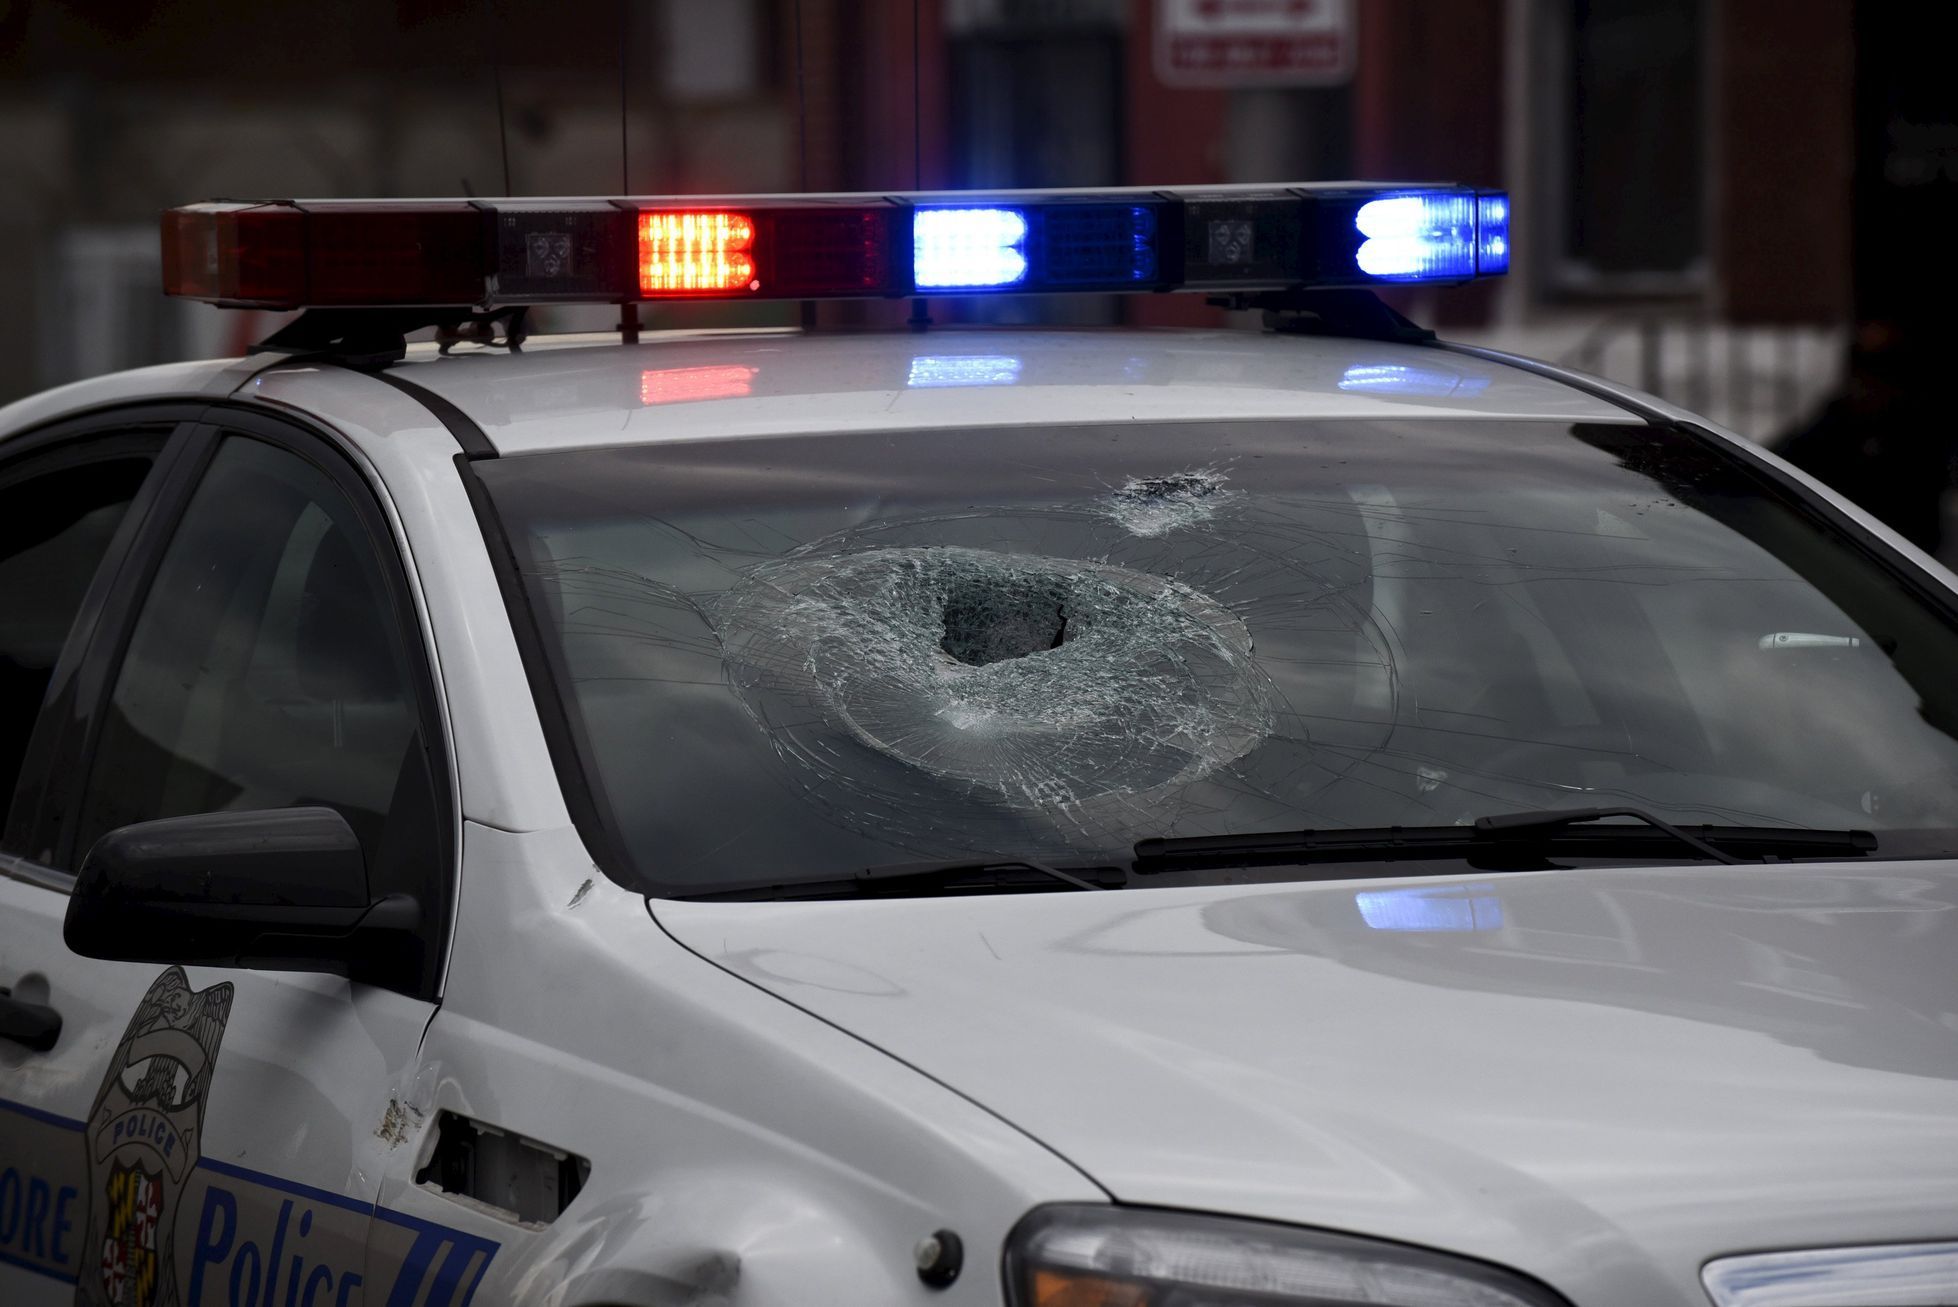 USA - Baltimore - nepokoje - policie